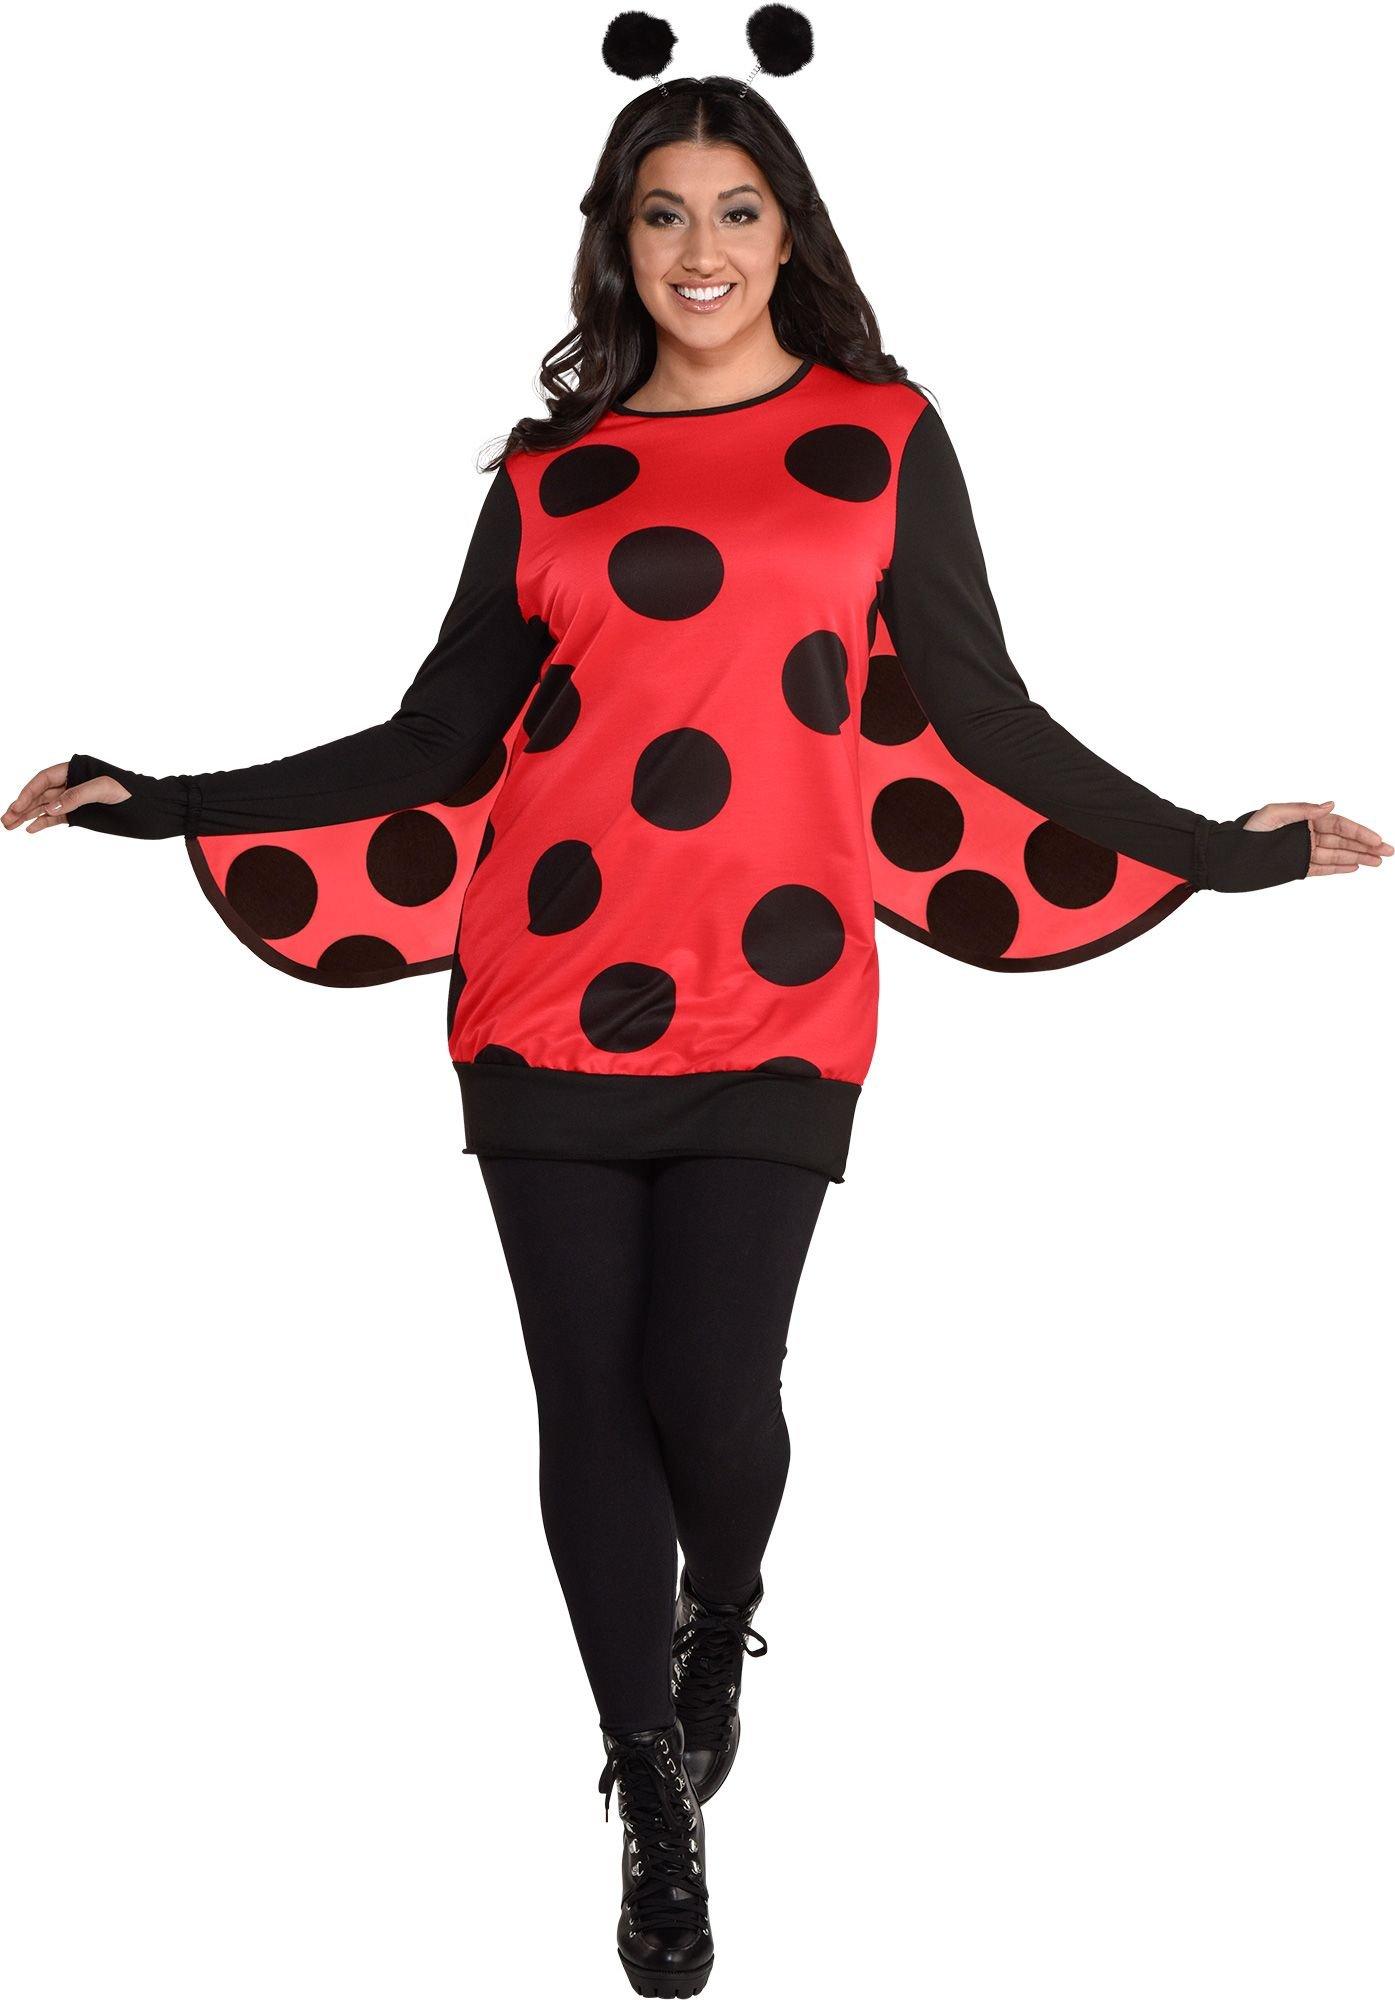 Halloweencostumes.com Lovely Ladybug Women's Costume : Target